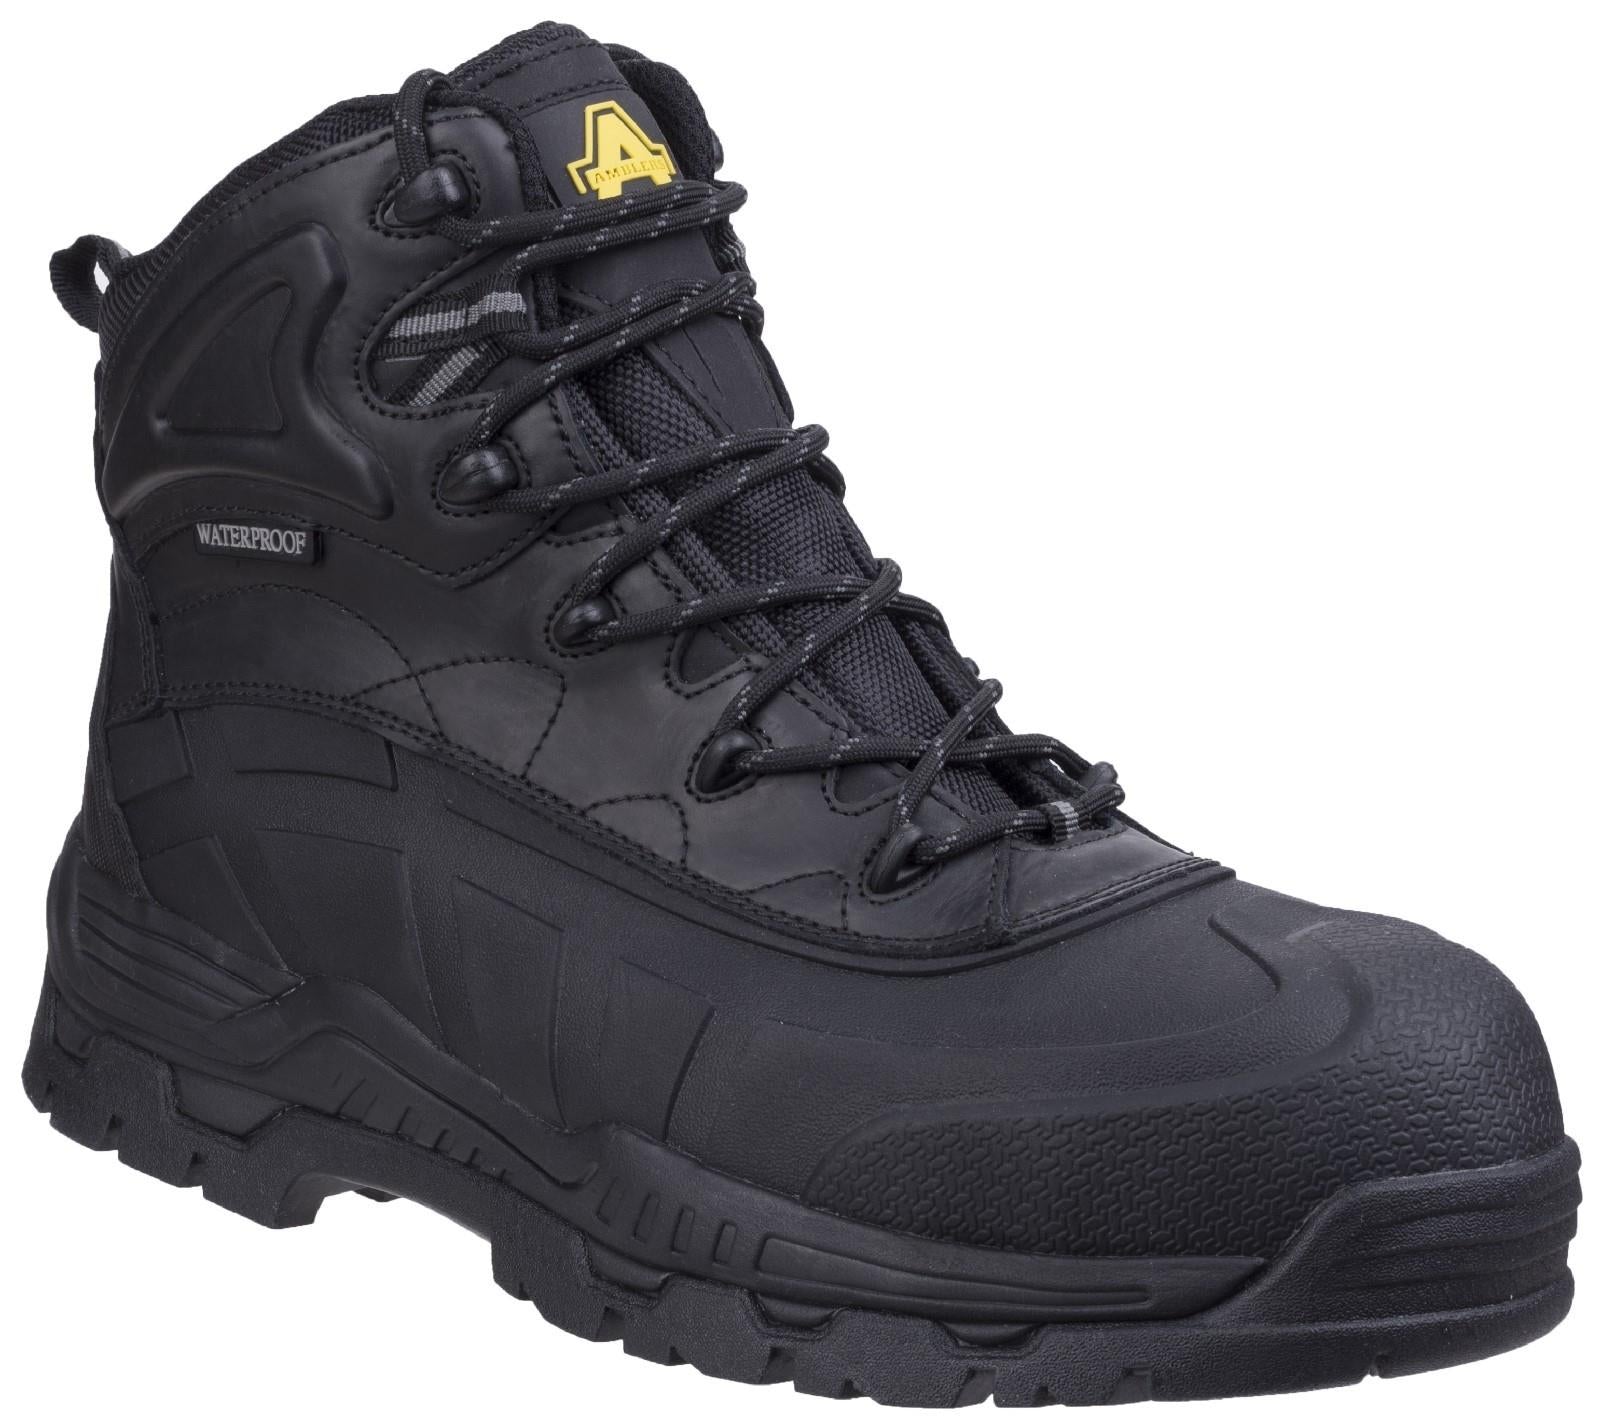 Amblers S3 black waterproof composite toe-cap/midsole safety boot #FS430